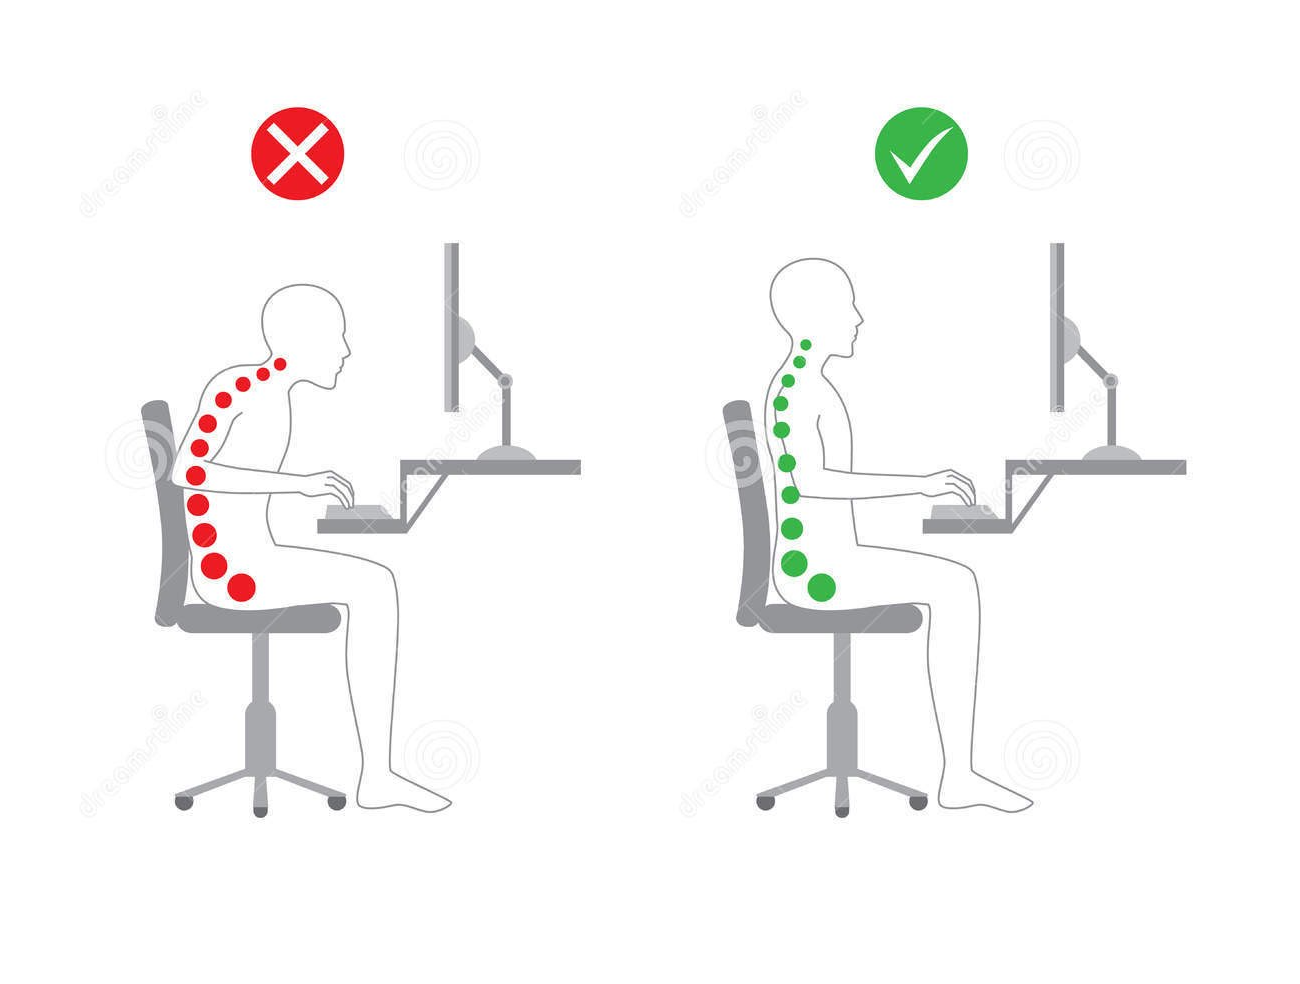 human-factors-and-ergonomics-sitting-office-desk-chairs-standing-desk